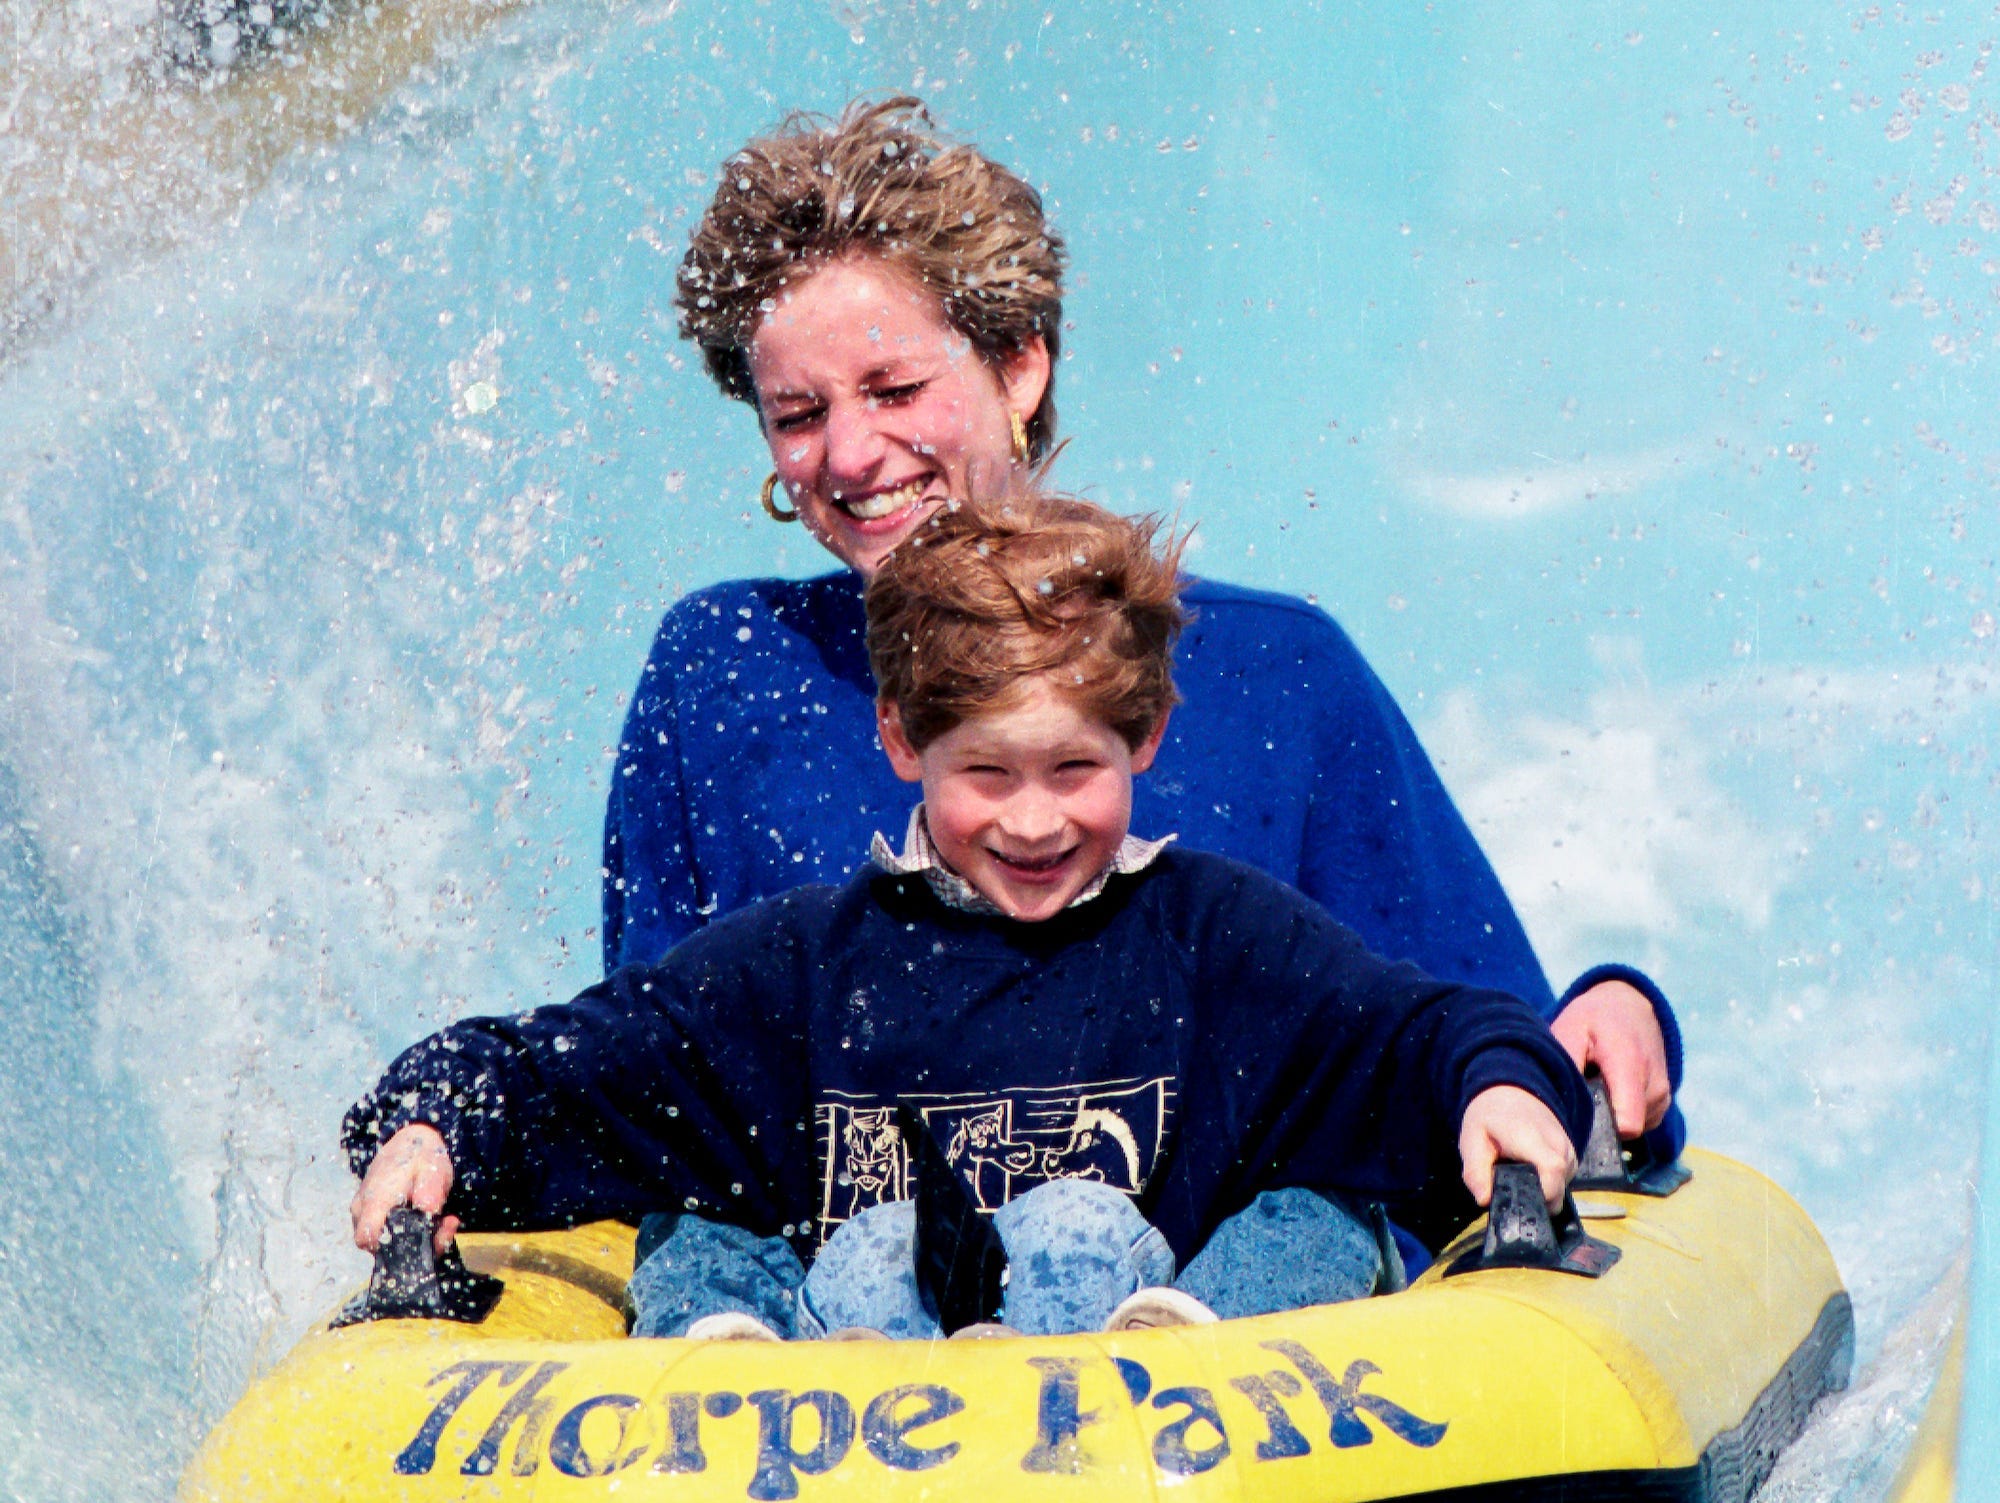 Princess Diana and Prince Harry slide down a water slide.